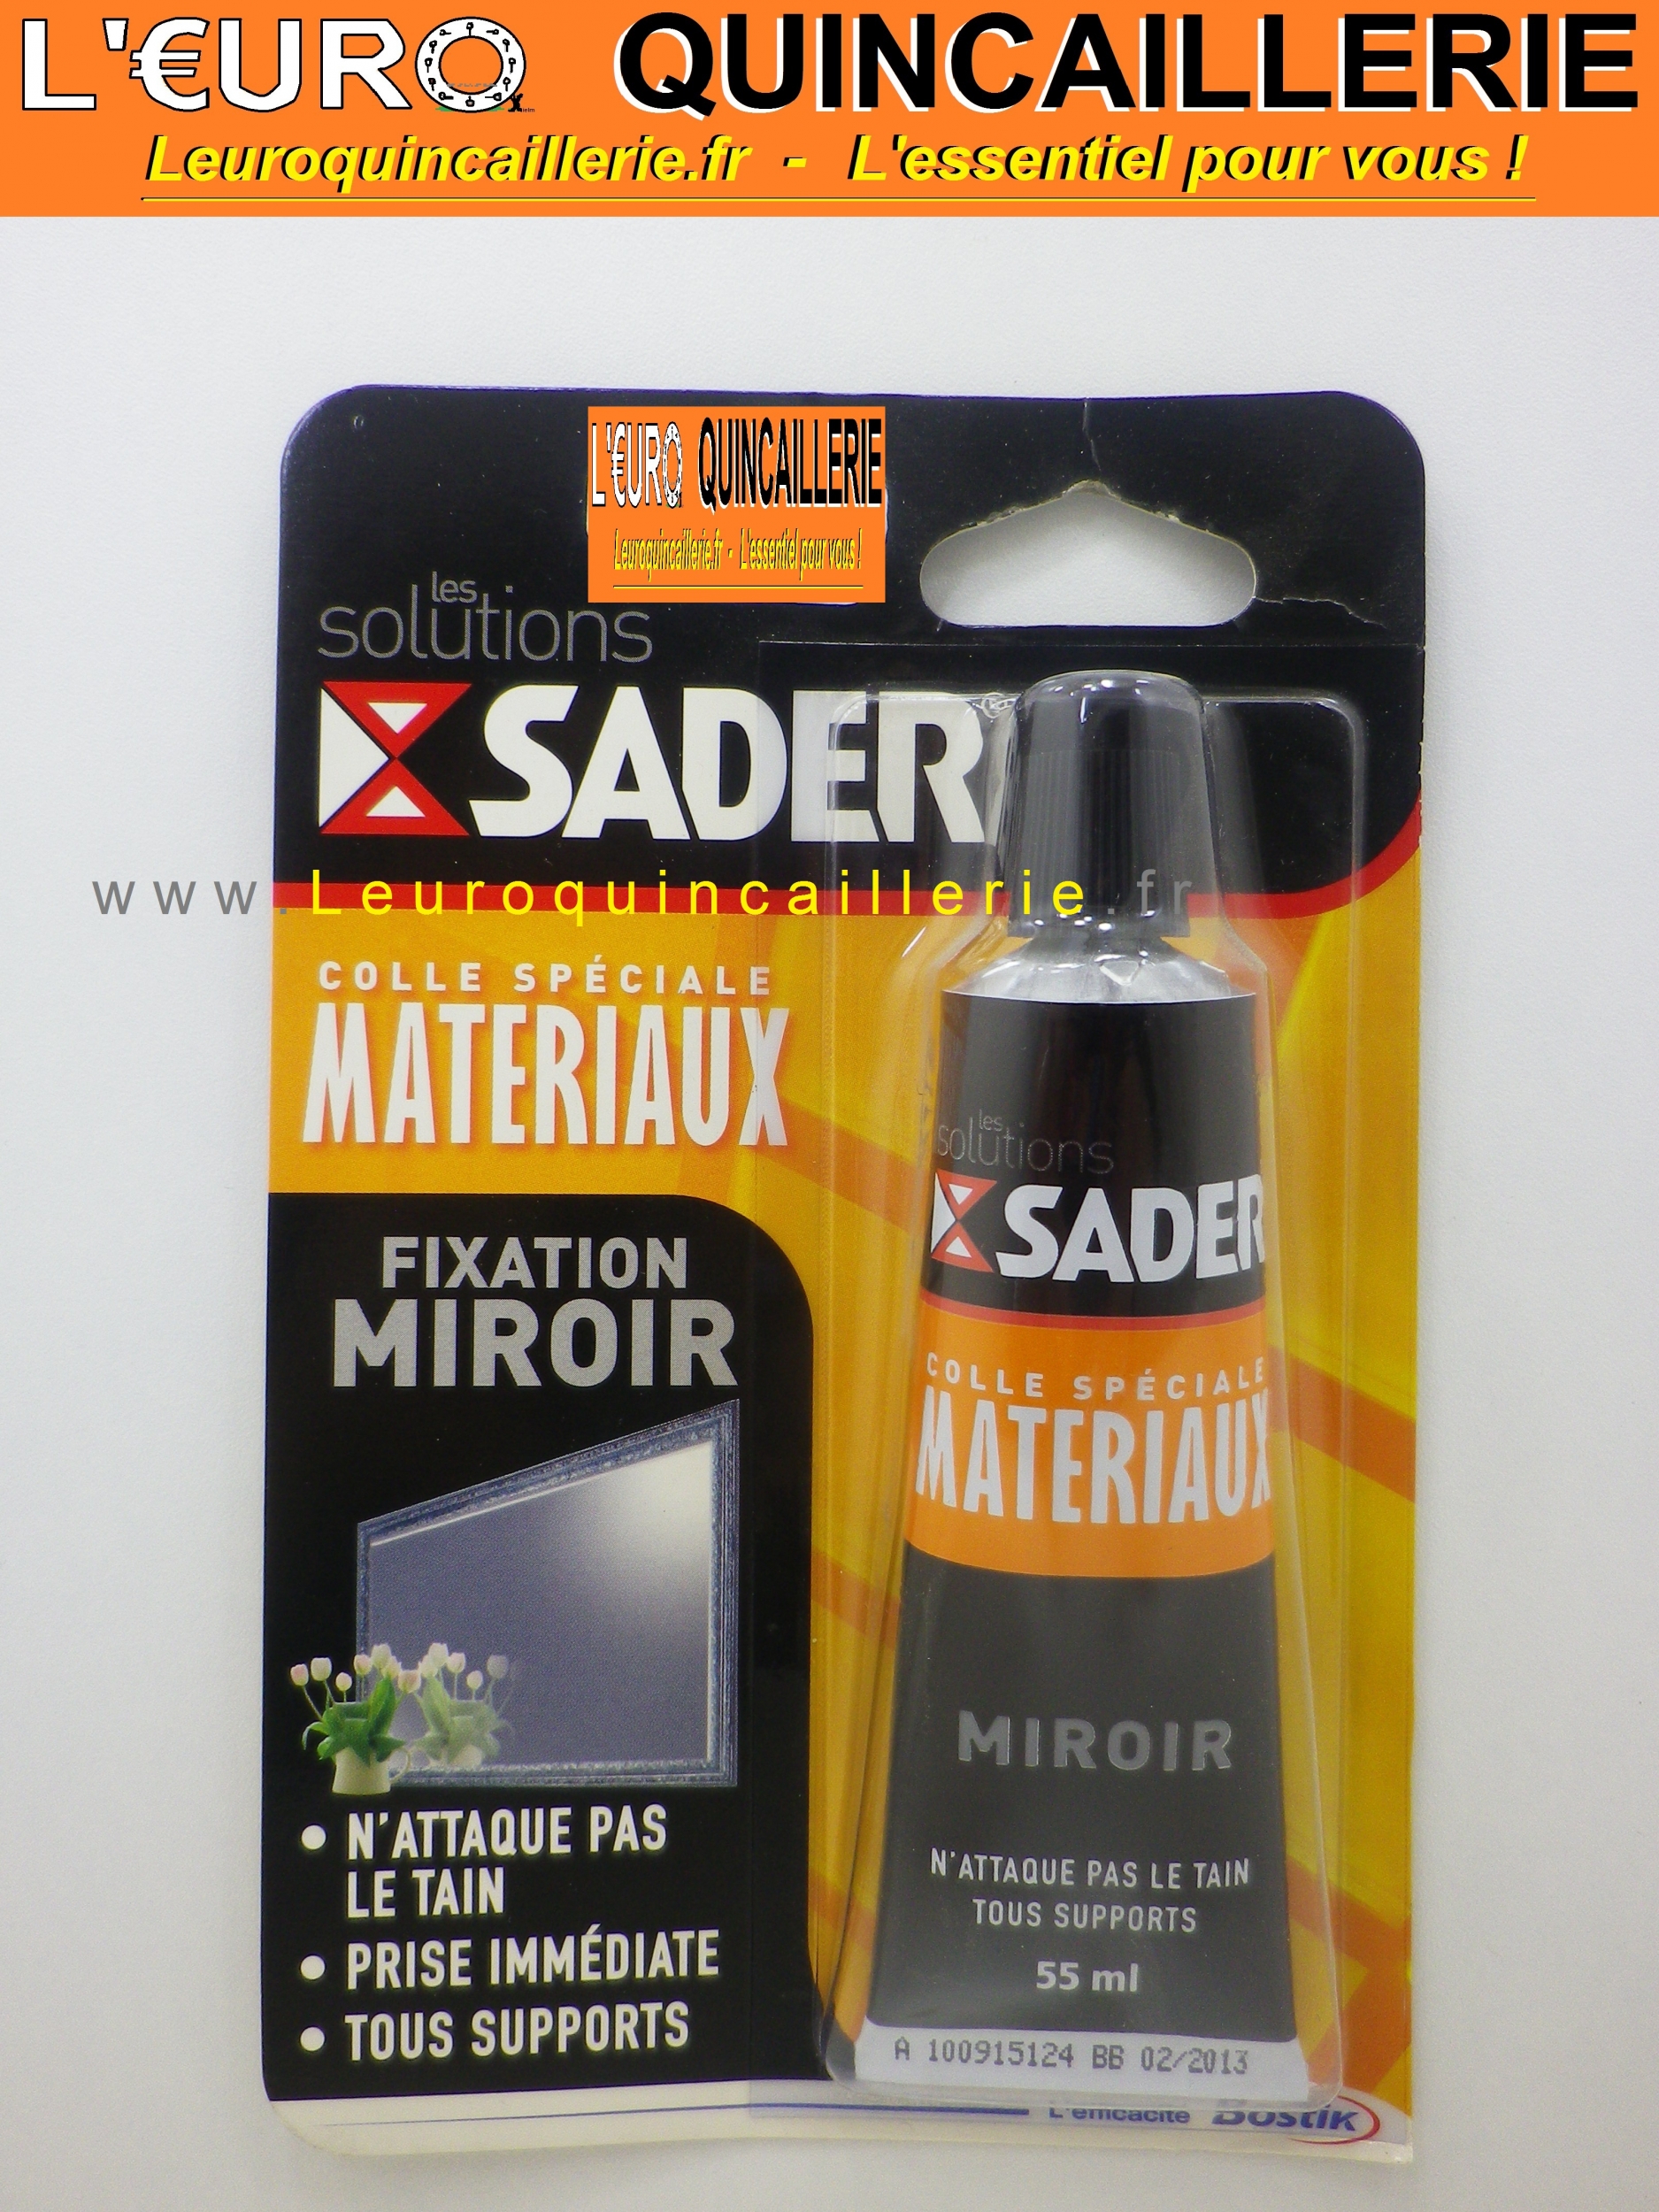 Colle spléciale fixation Miroir tube sader 55ml